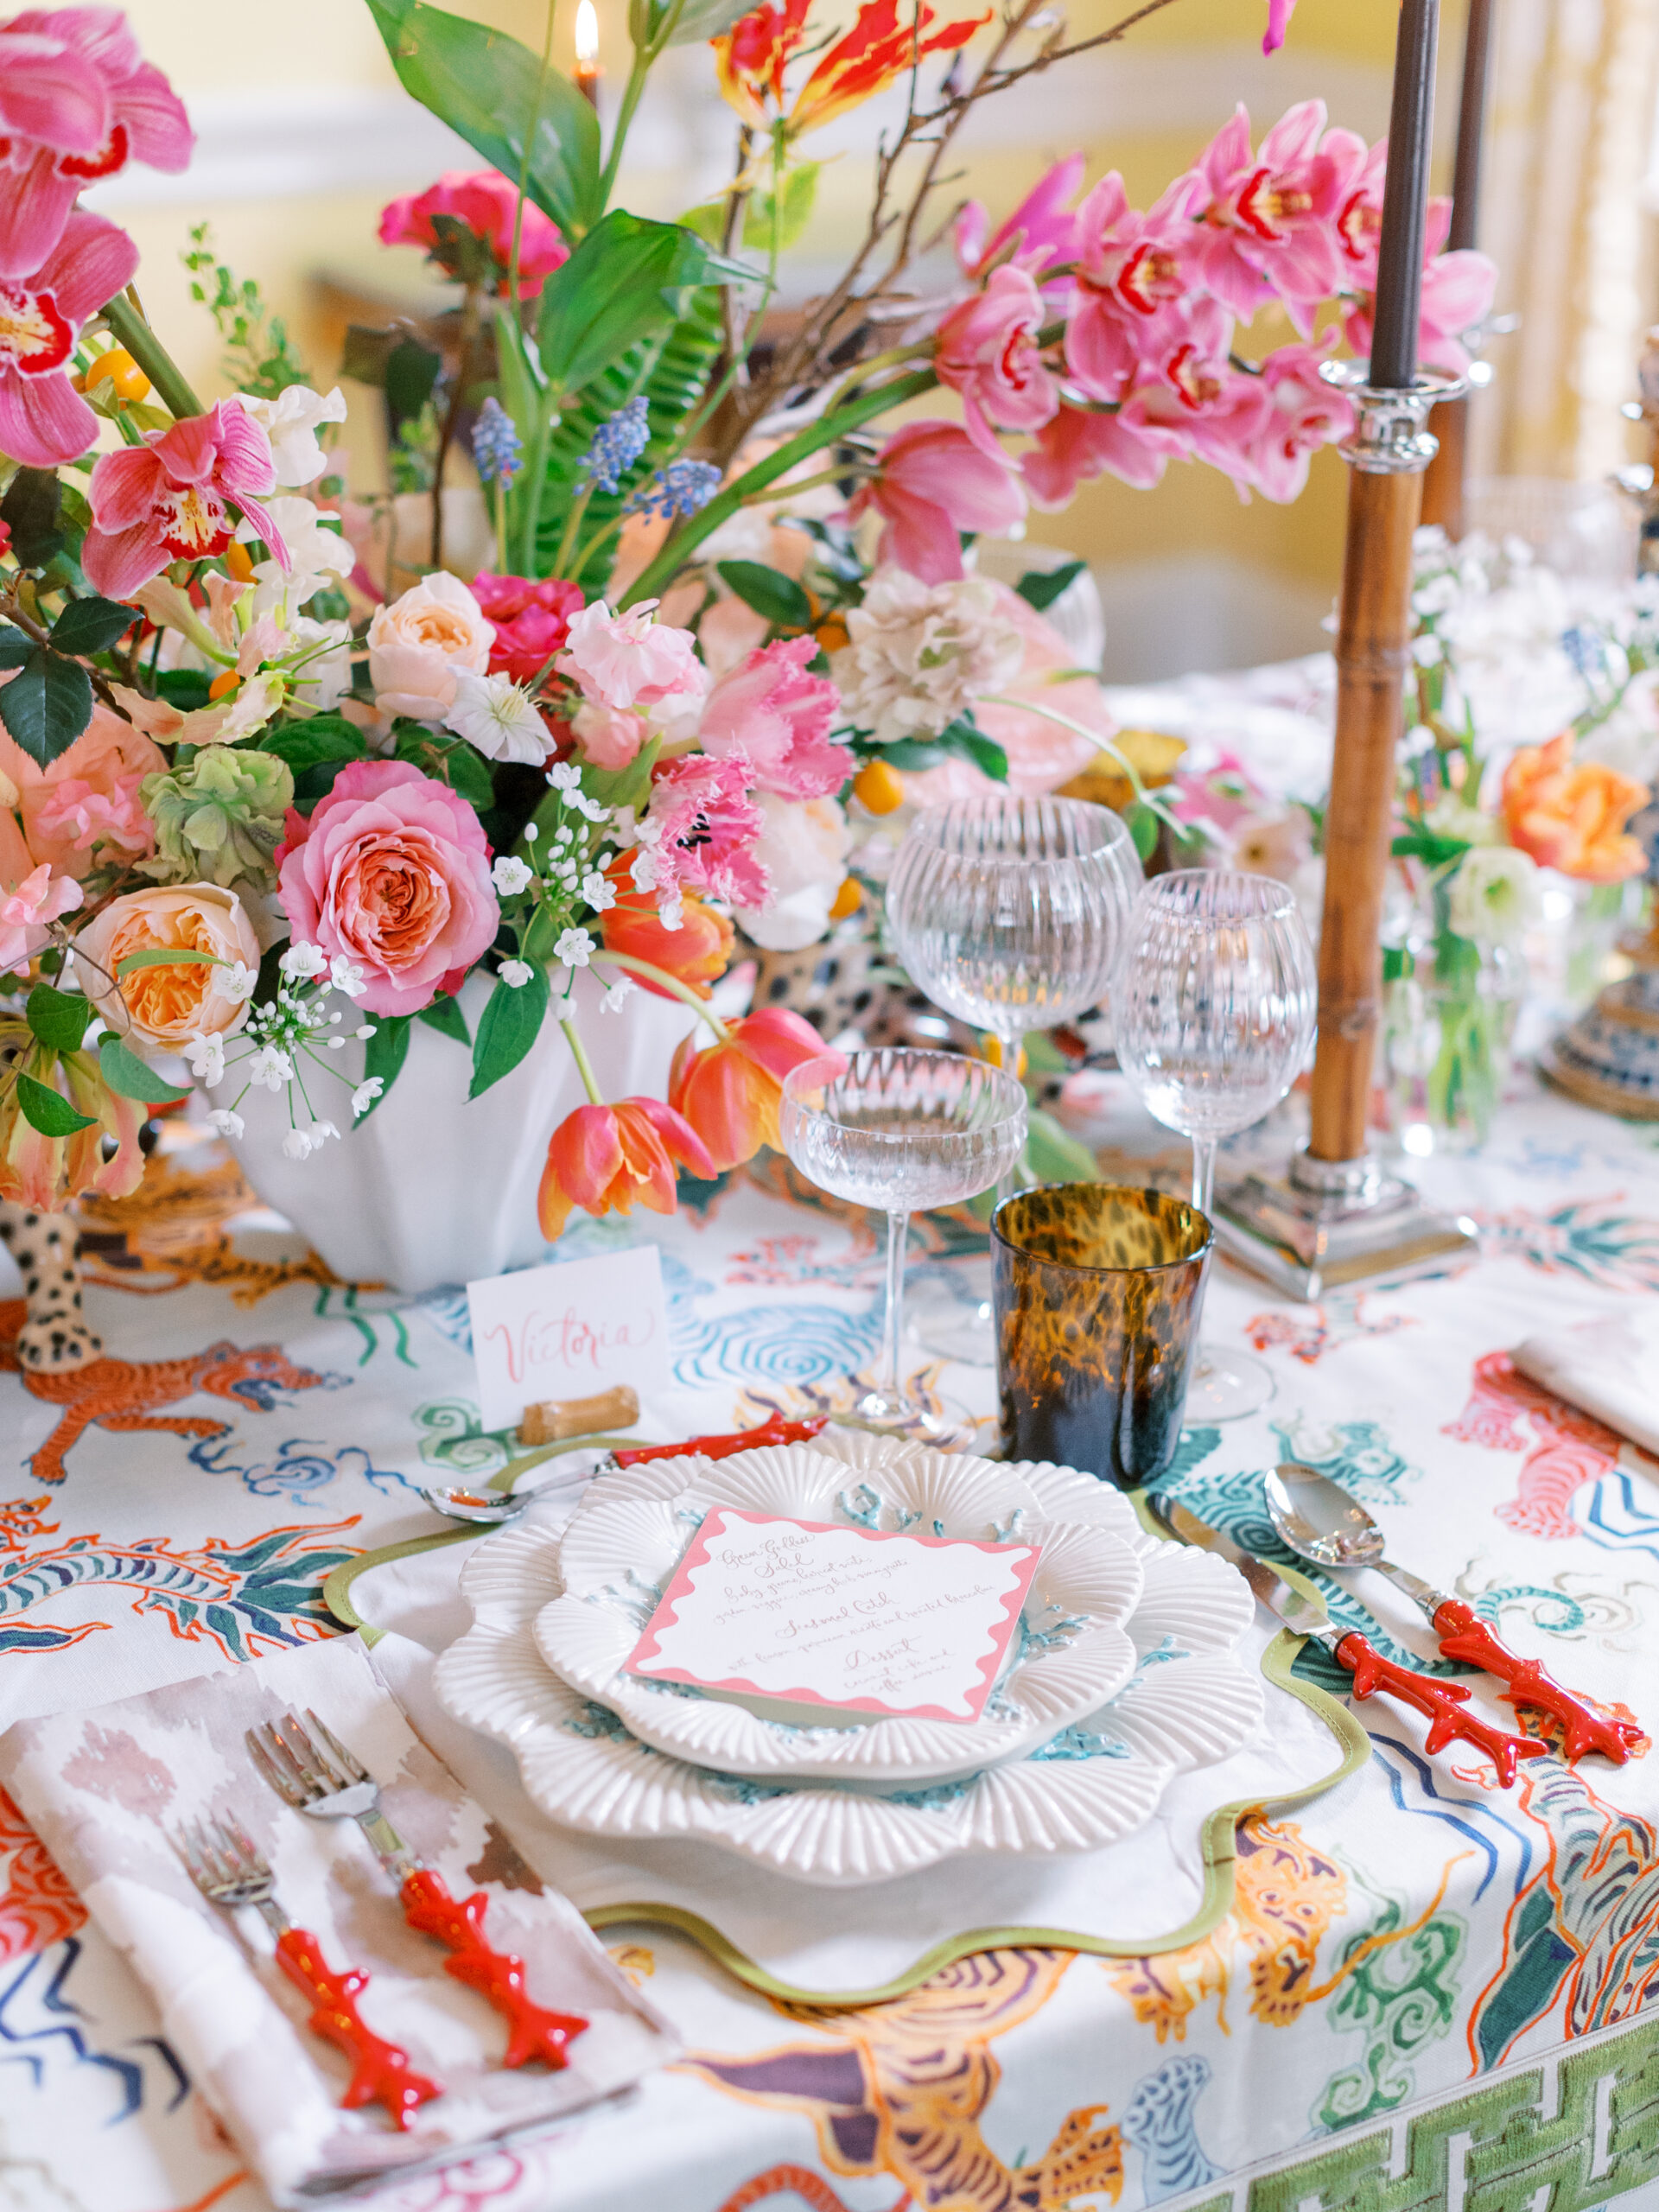 Lowdnes Grove Wedding by destination film wedding photographer Katie Trauffer Photography - jungle inspired reception table design